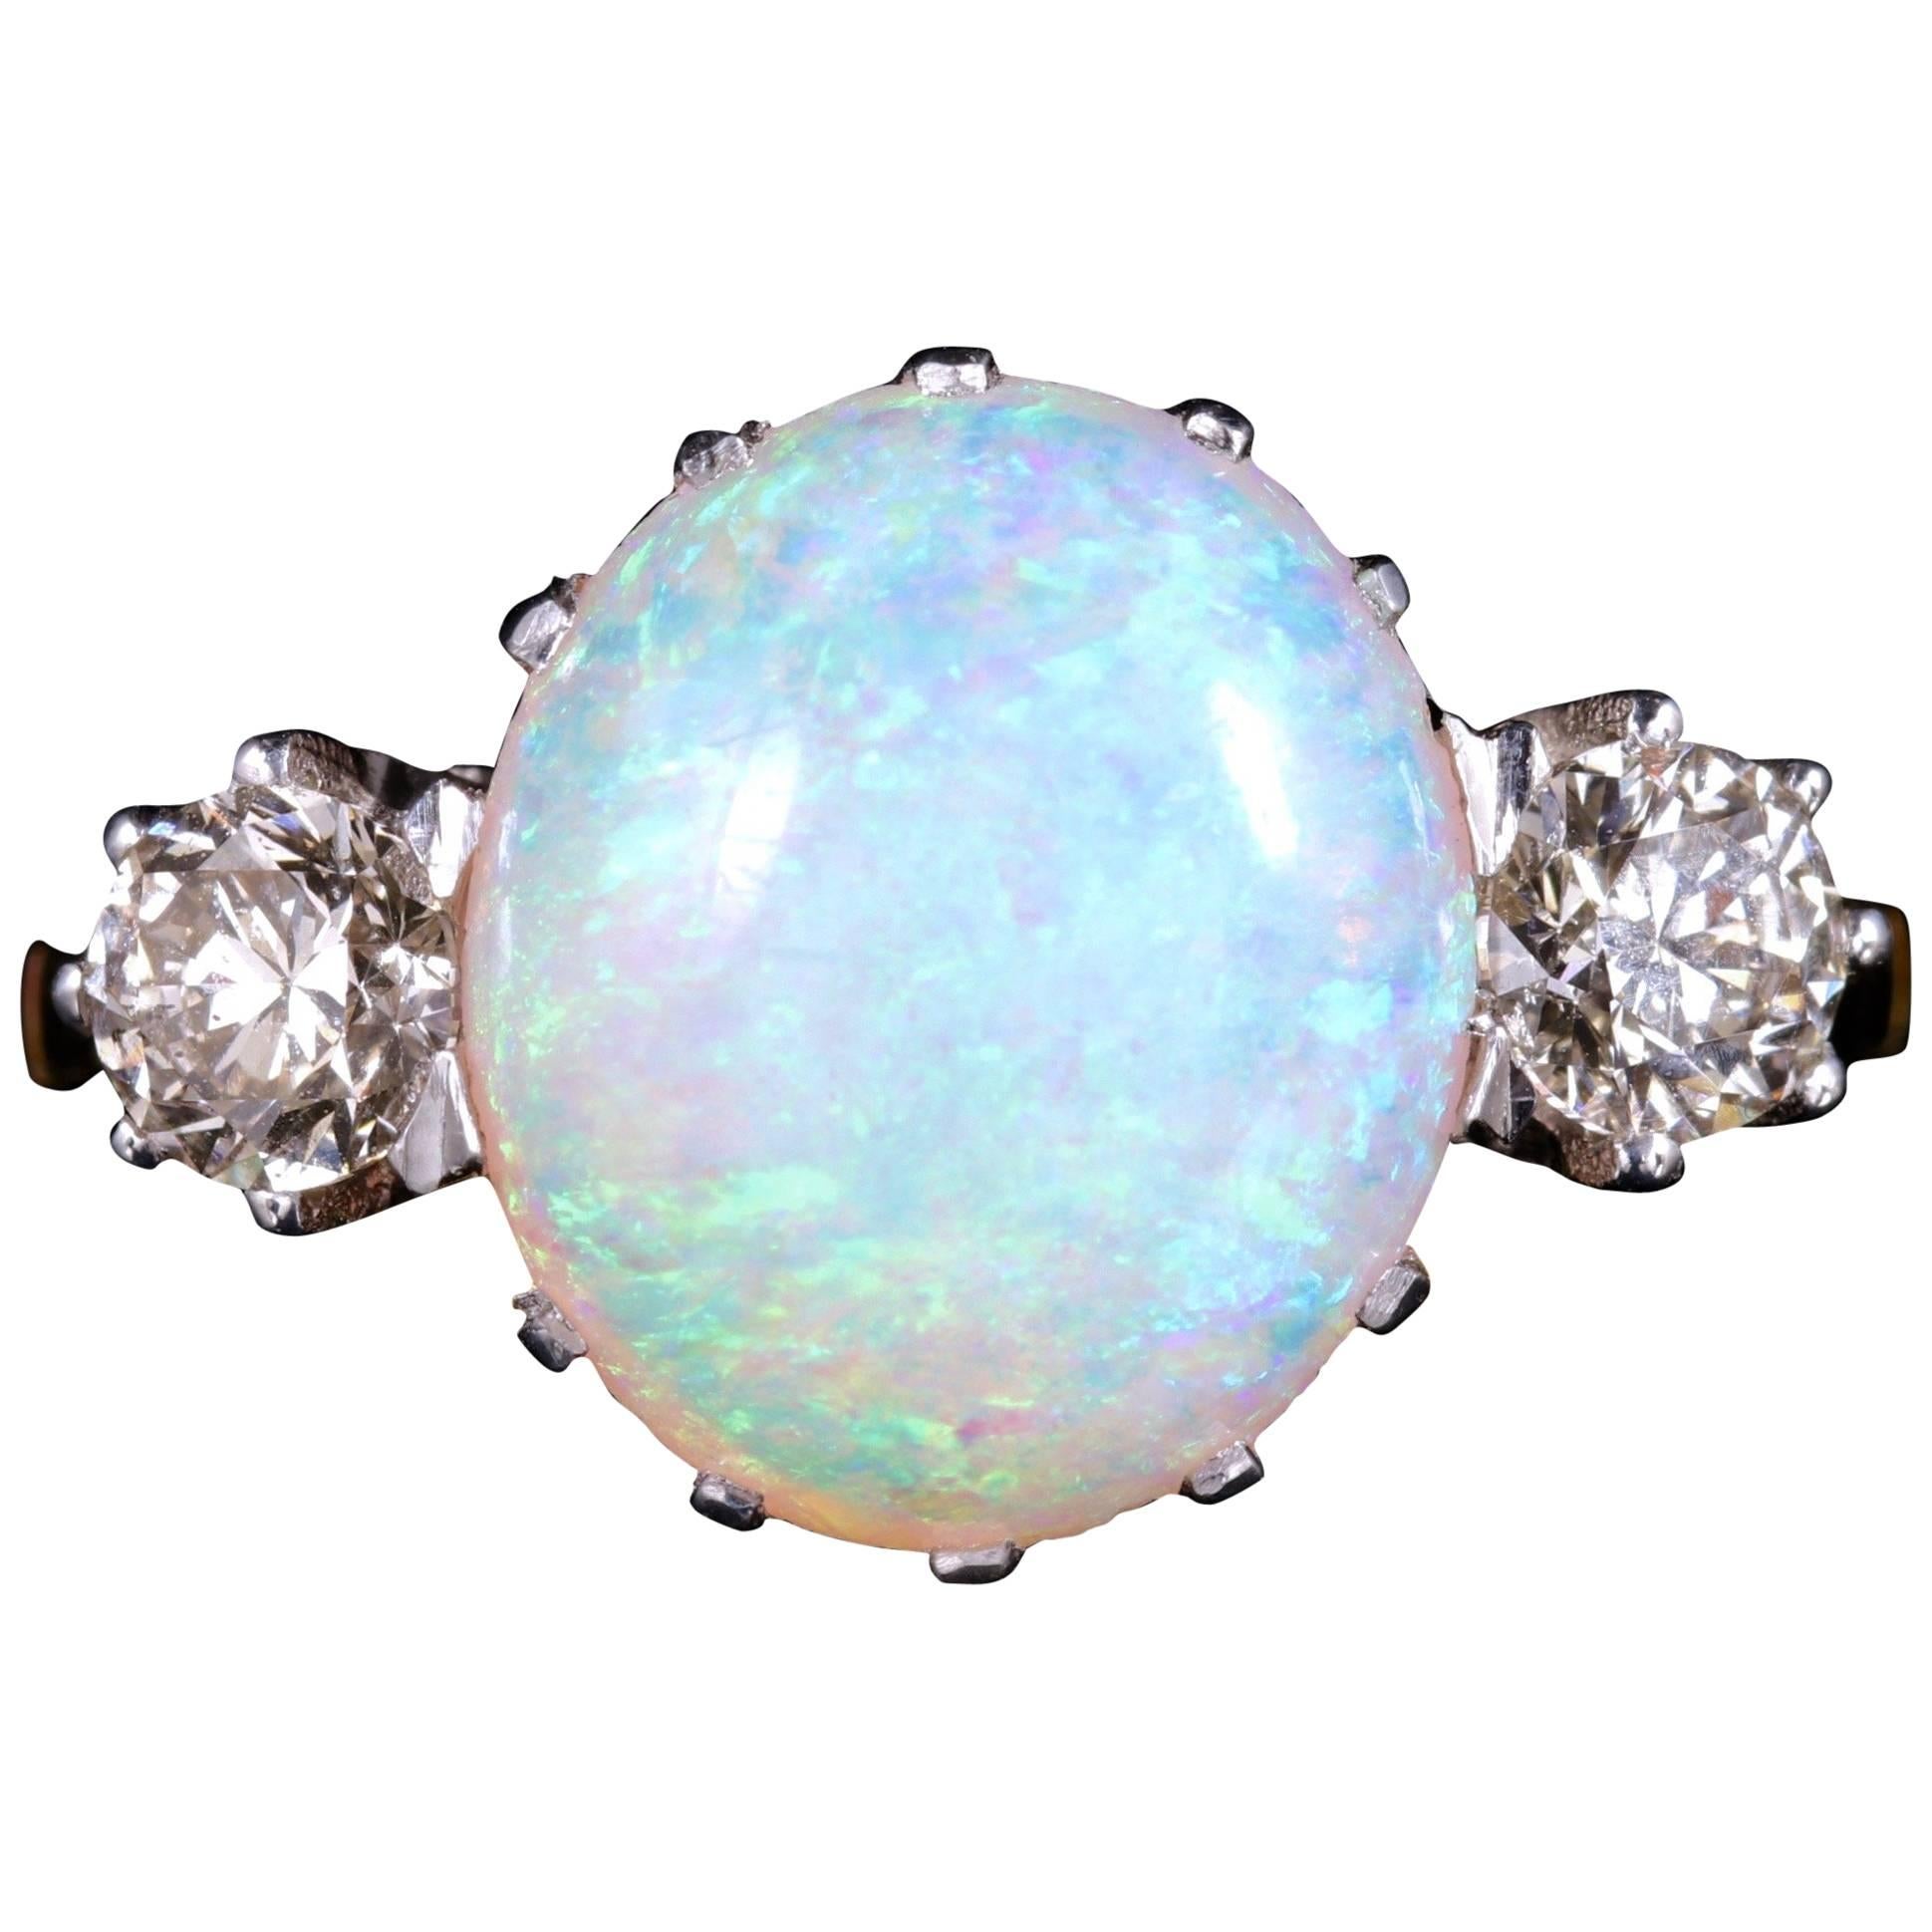 Antique Victorian Opal Diamond Ring 15 Carat Gold Natural Opal, circa 1900